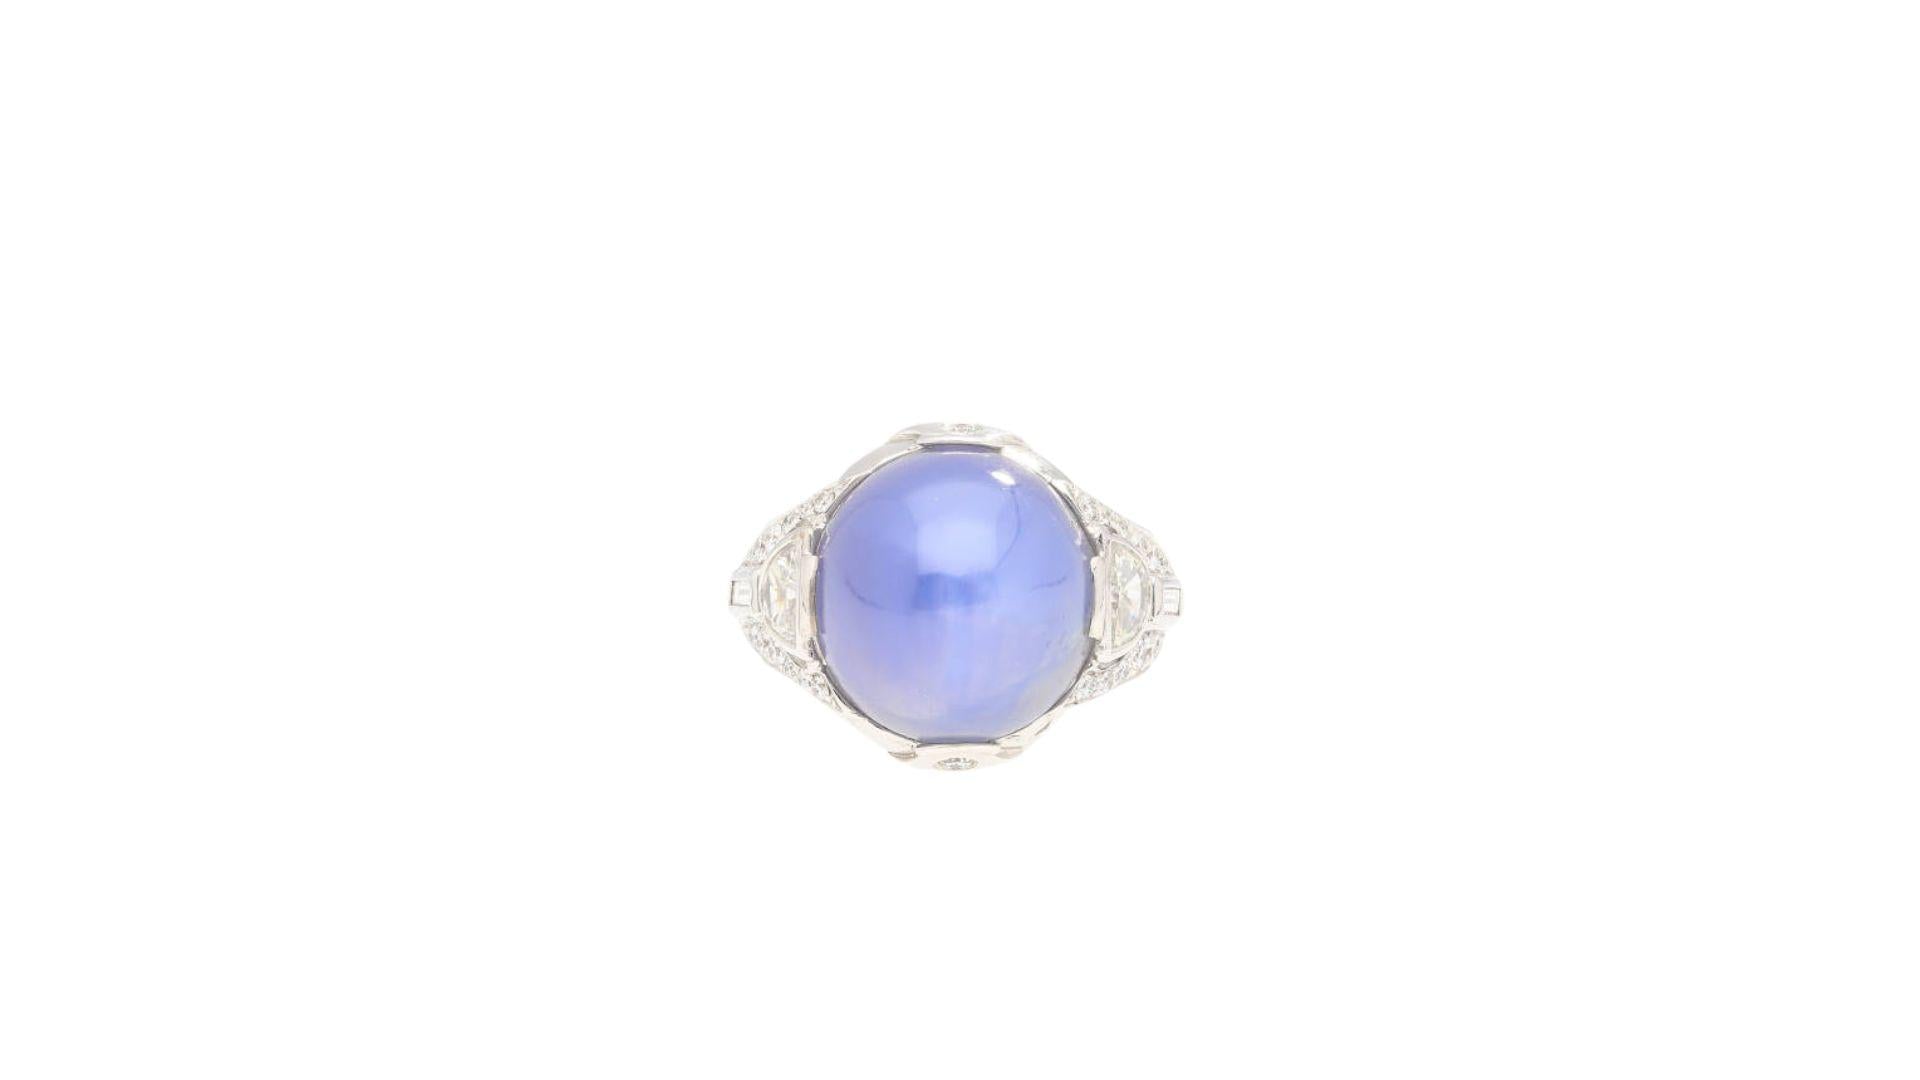 GRS Certified 18.29 Carat No Heat Sri Lanka Pastel Blue Star Sapphire Ring